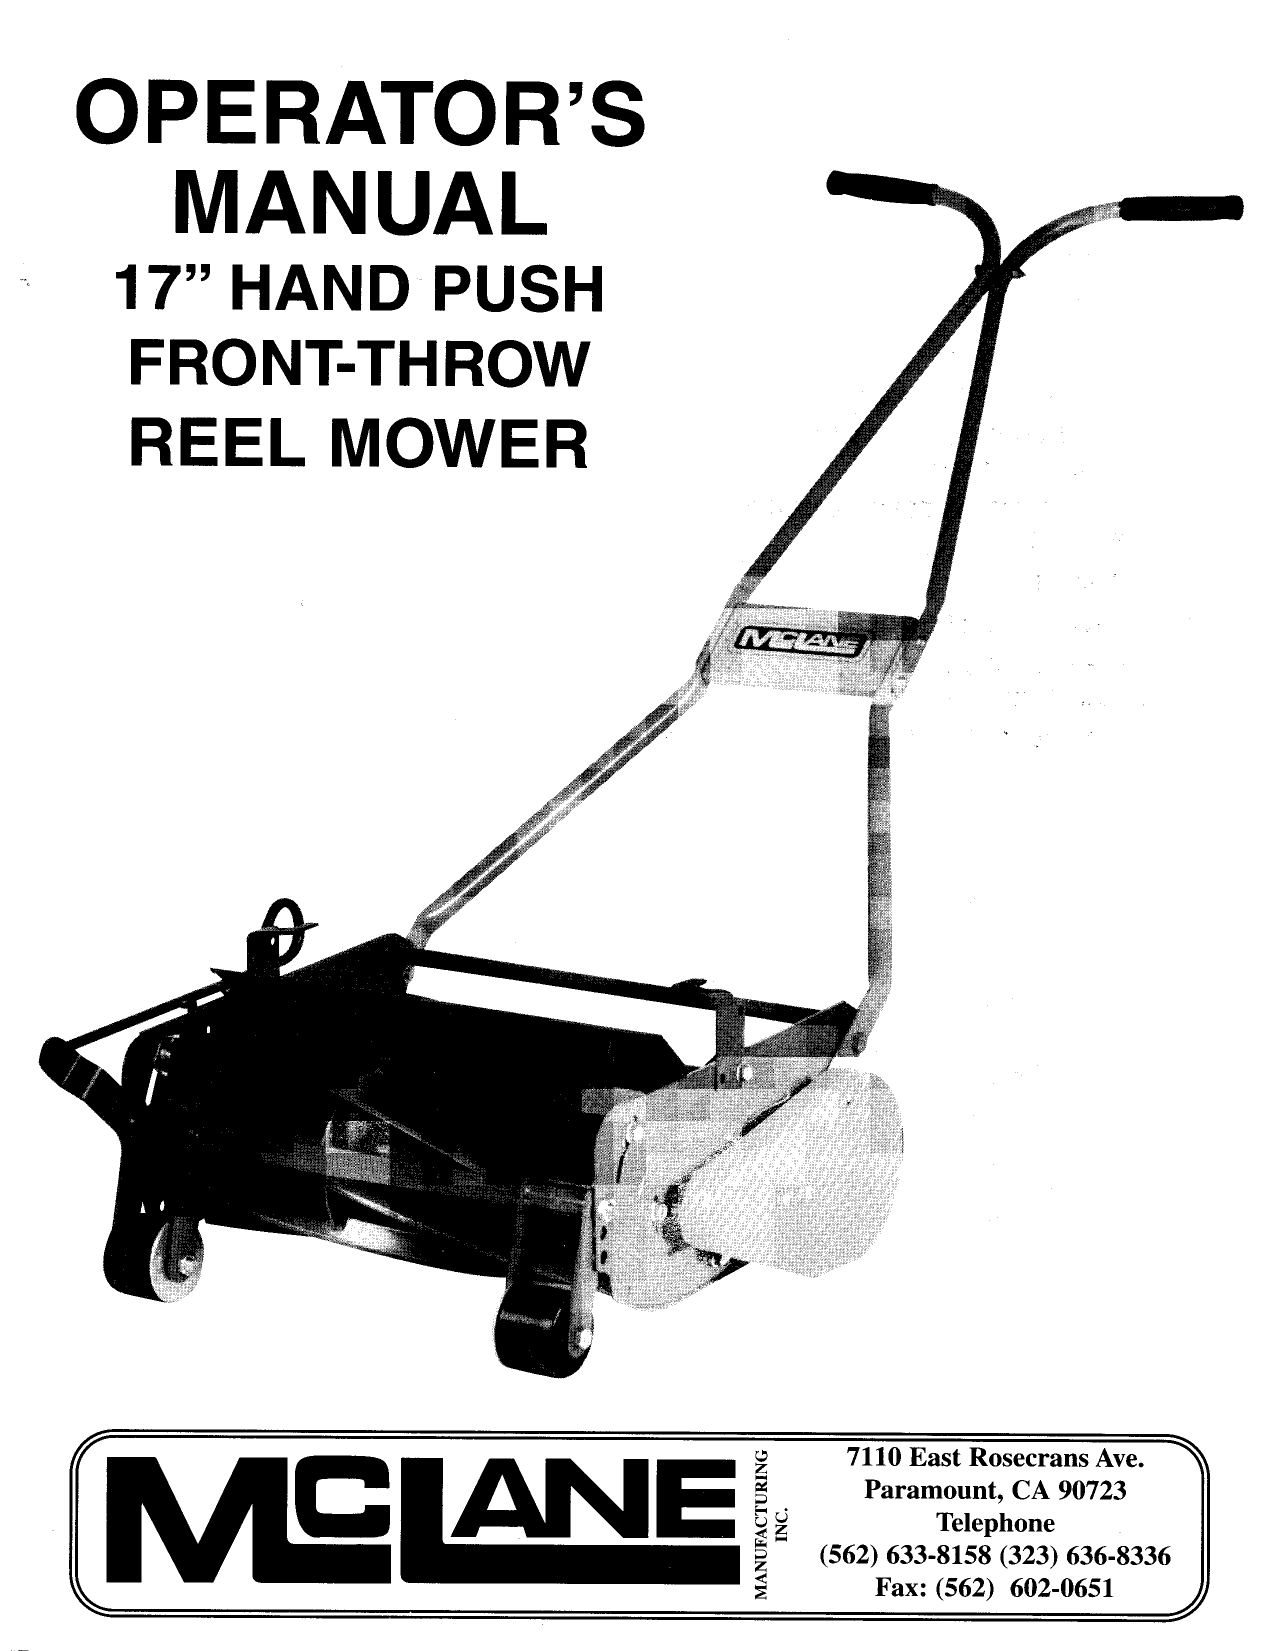 Mclane 17 reel mower Operator's Manual